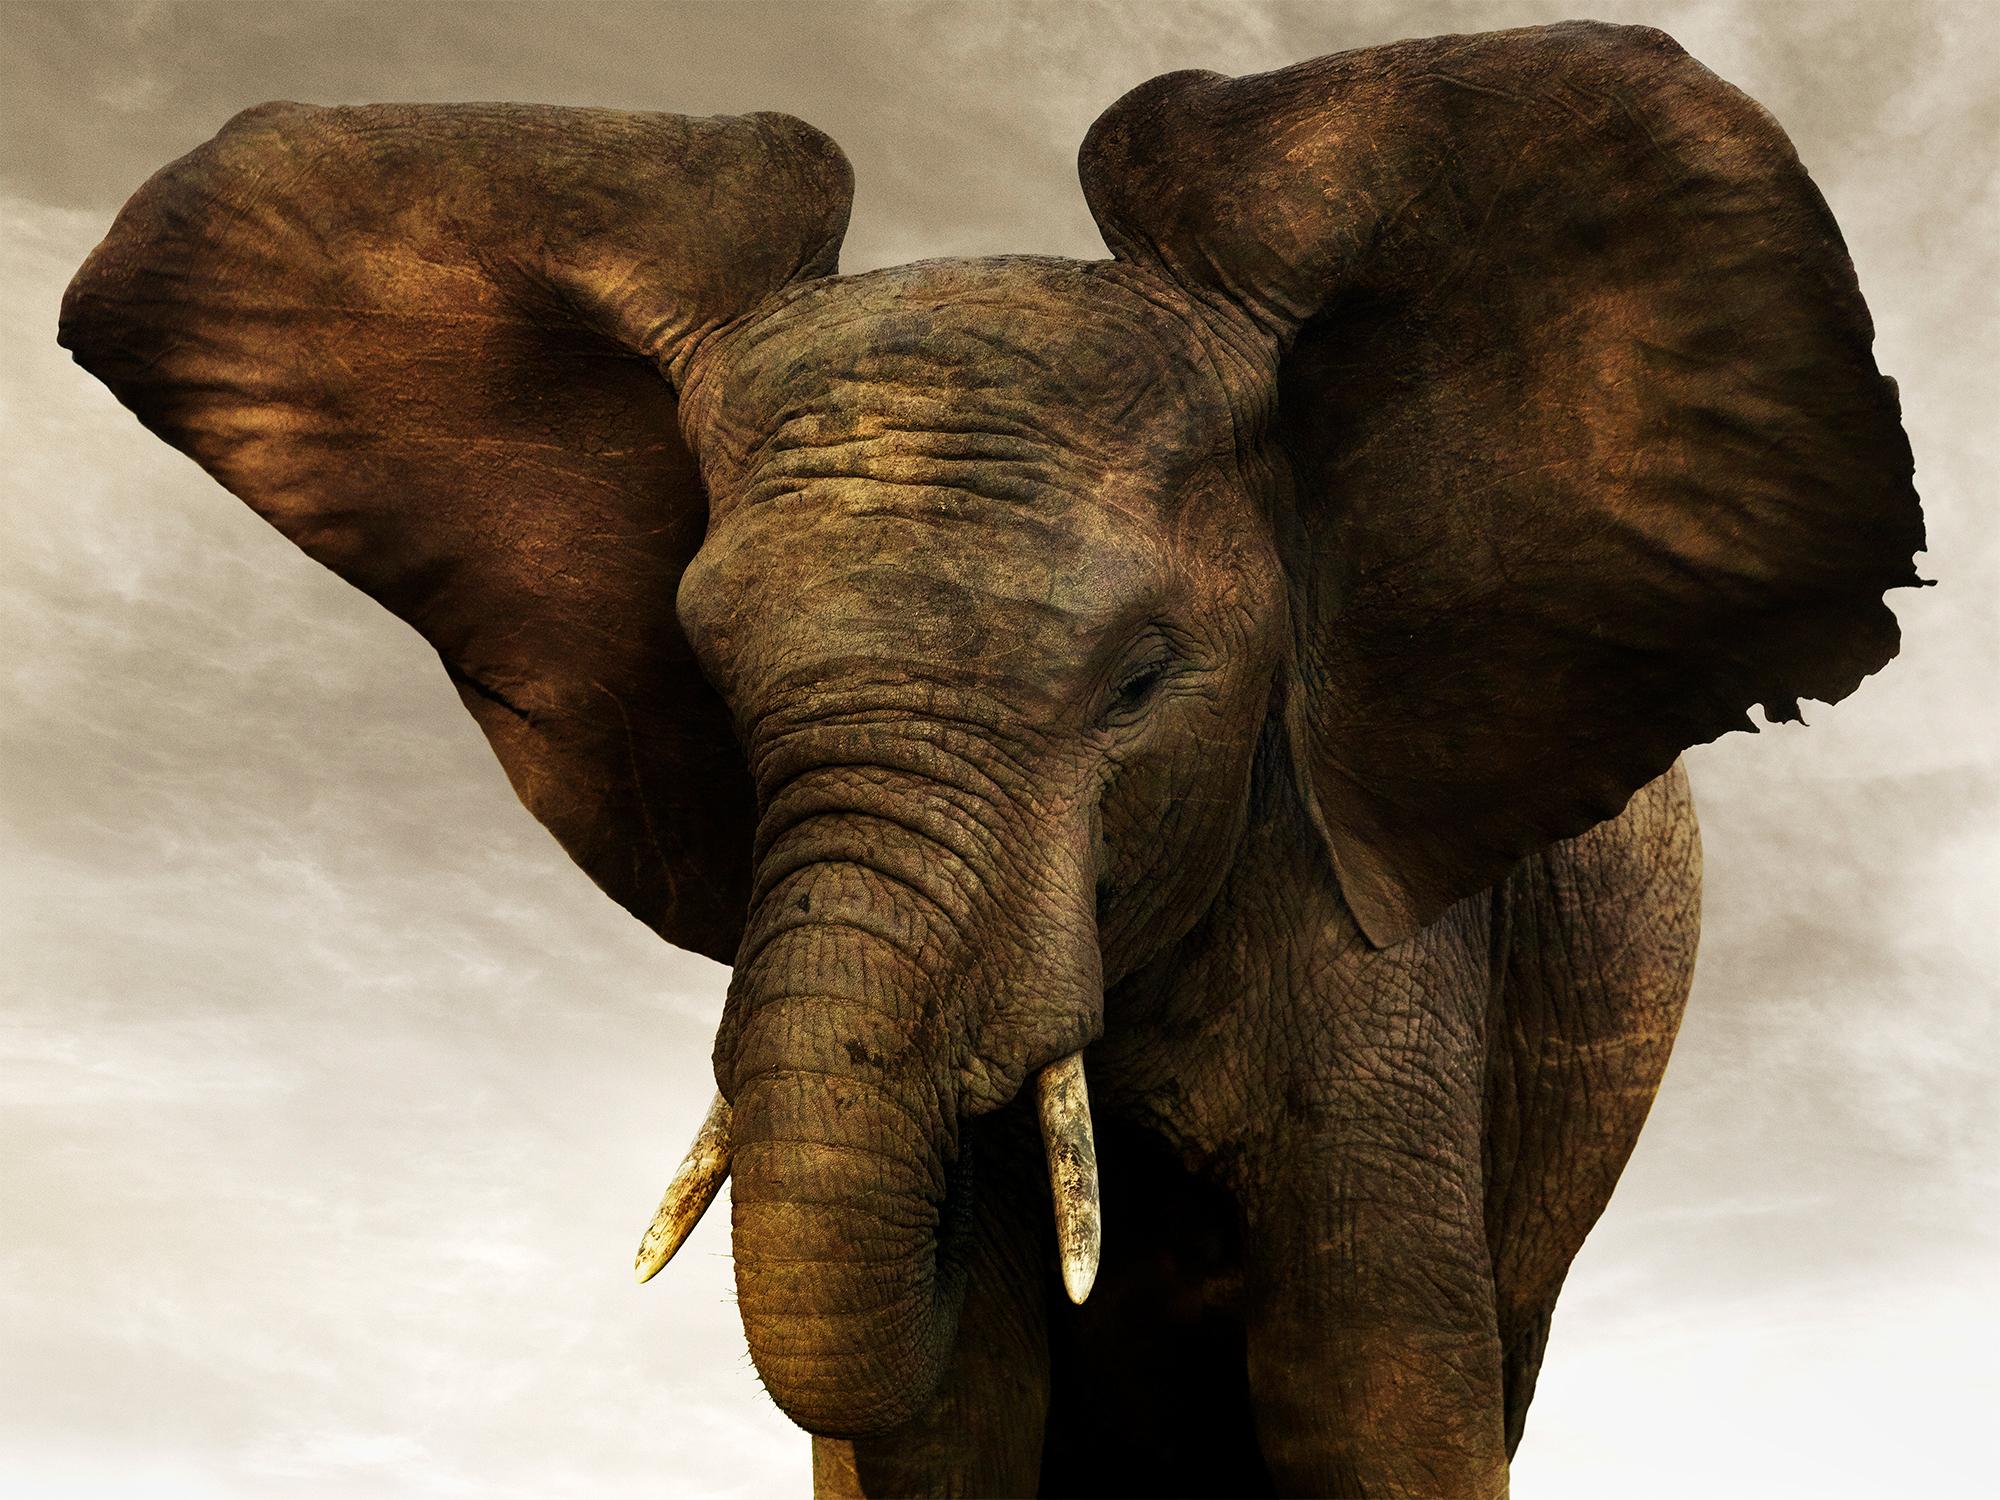 Joachim Schmeisser Portrait Photograph - Golden Giant II, animal, wildlife, black and white photography, elephant